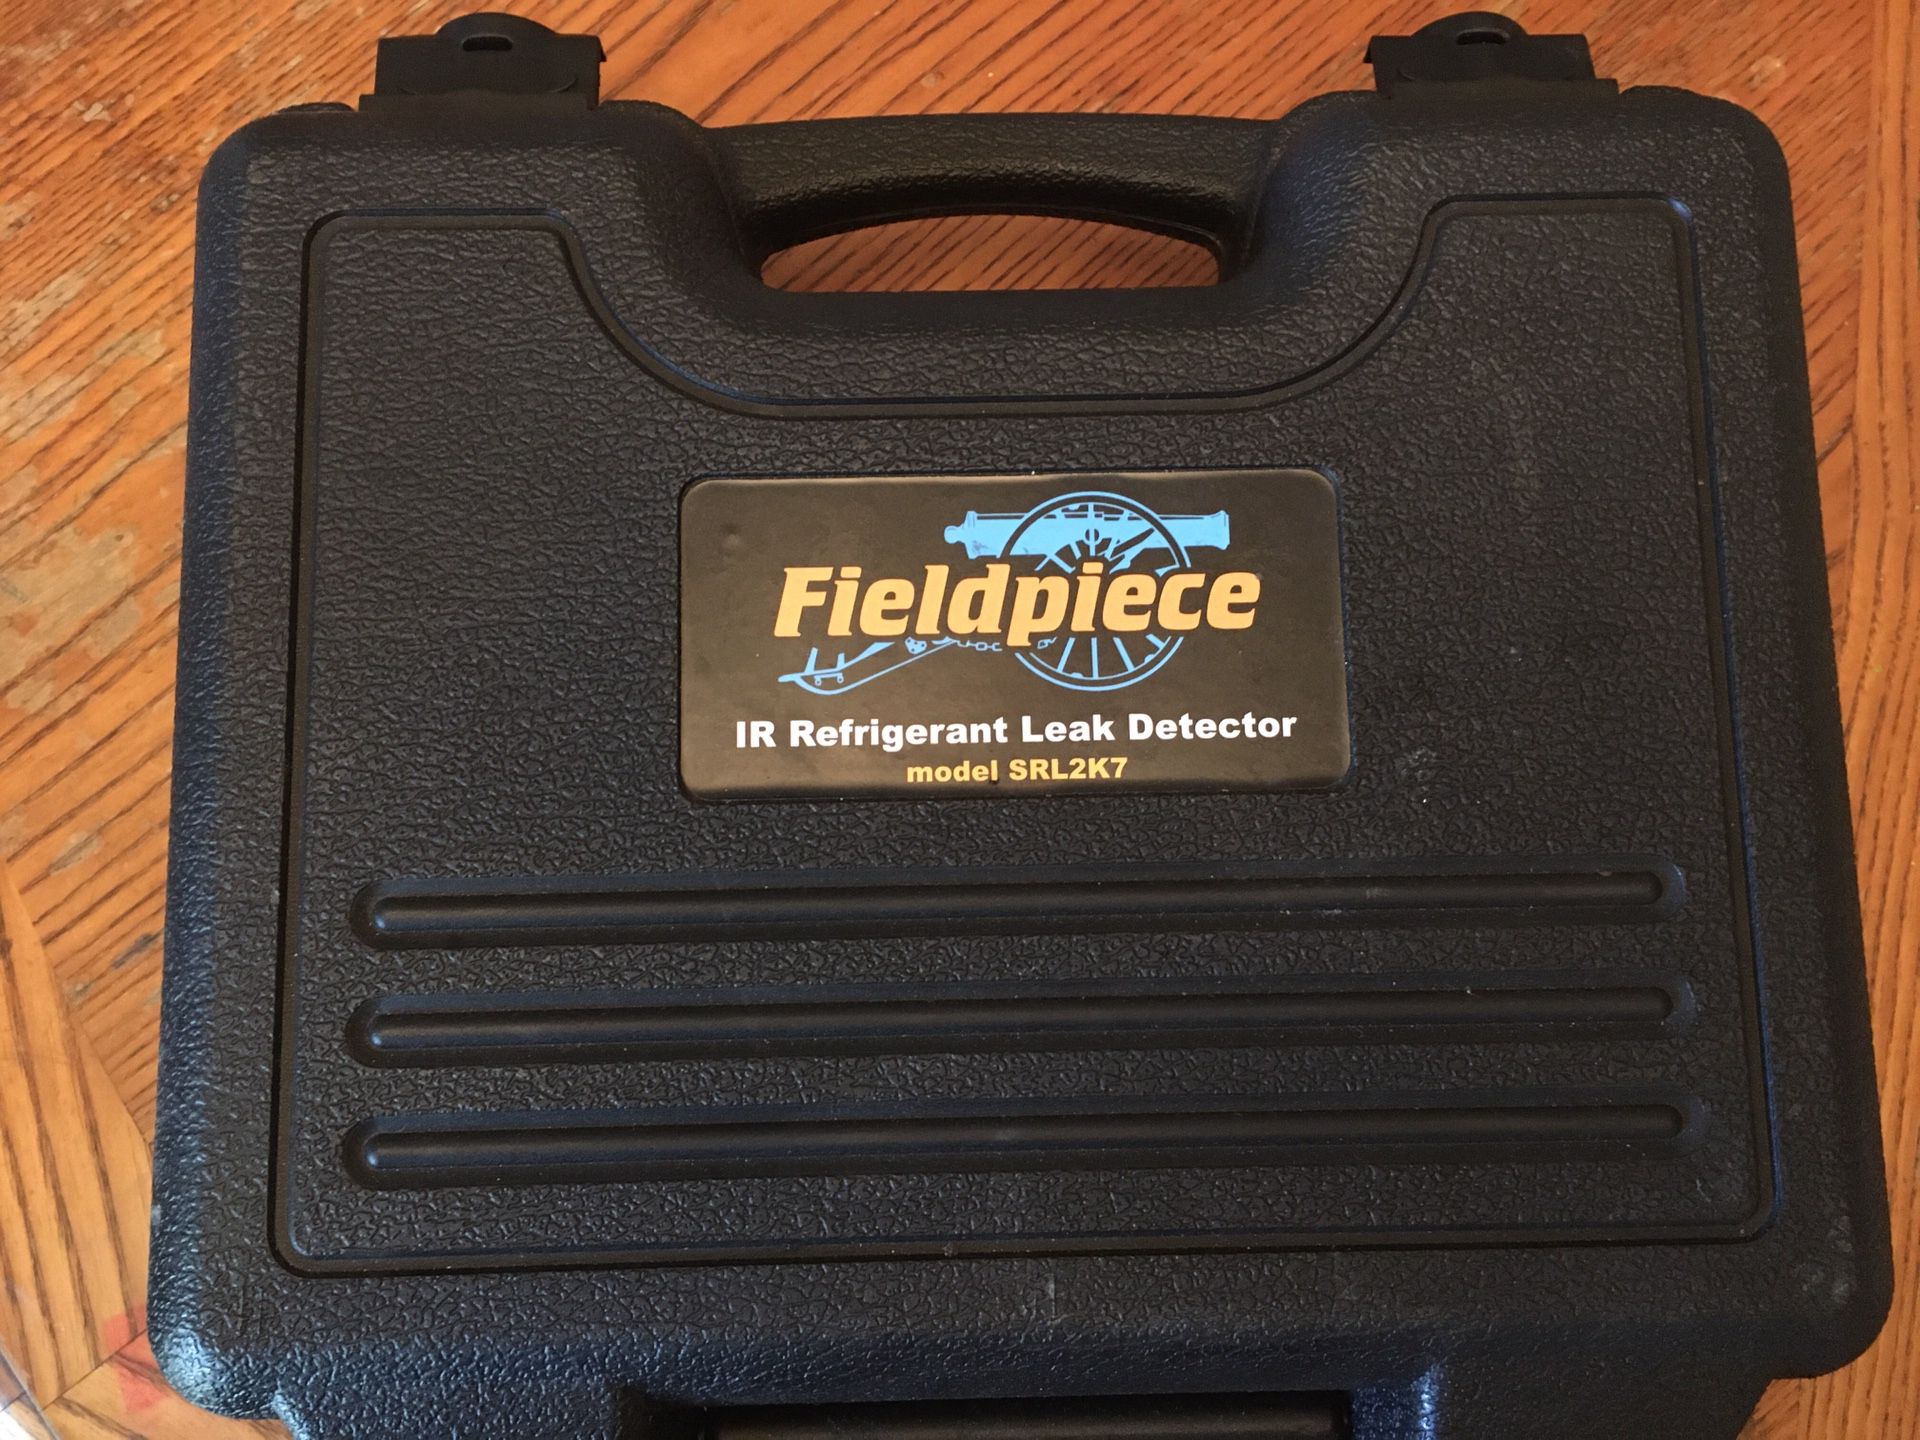 Fieldpiece Refrigerant Leak Detector